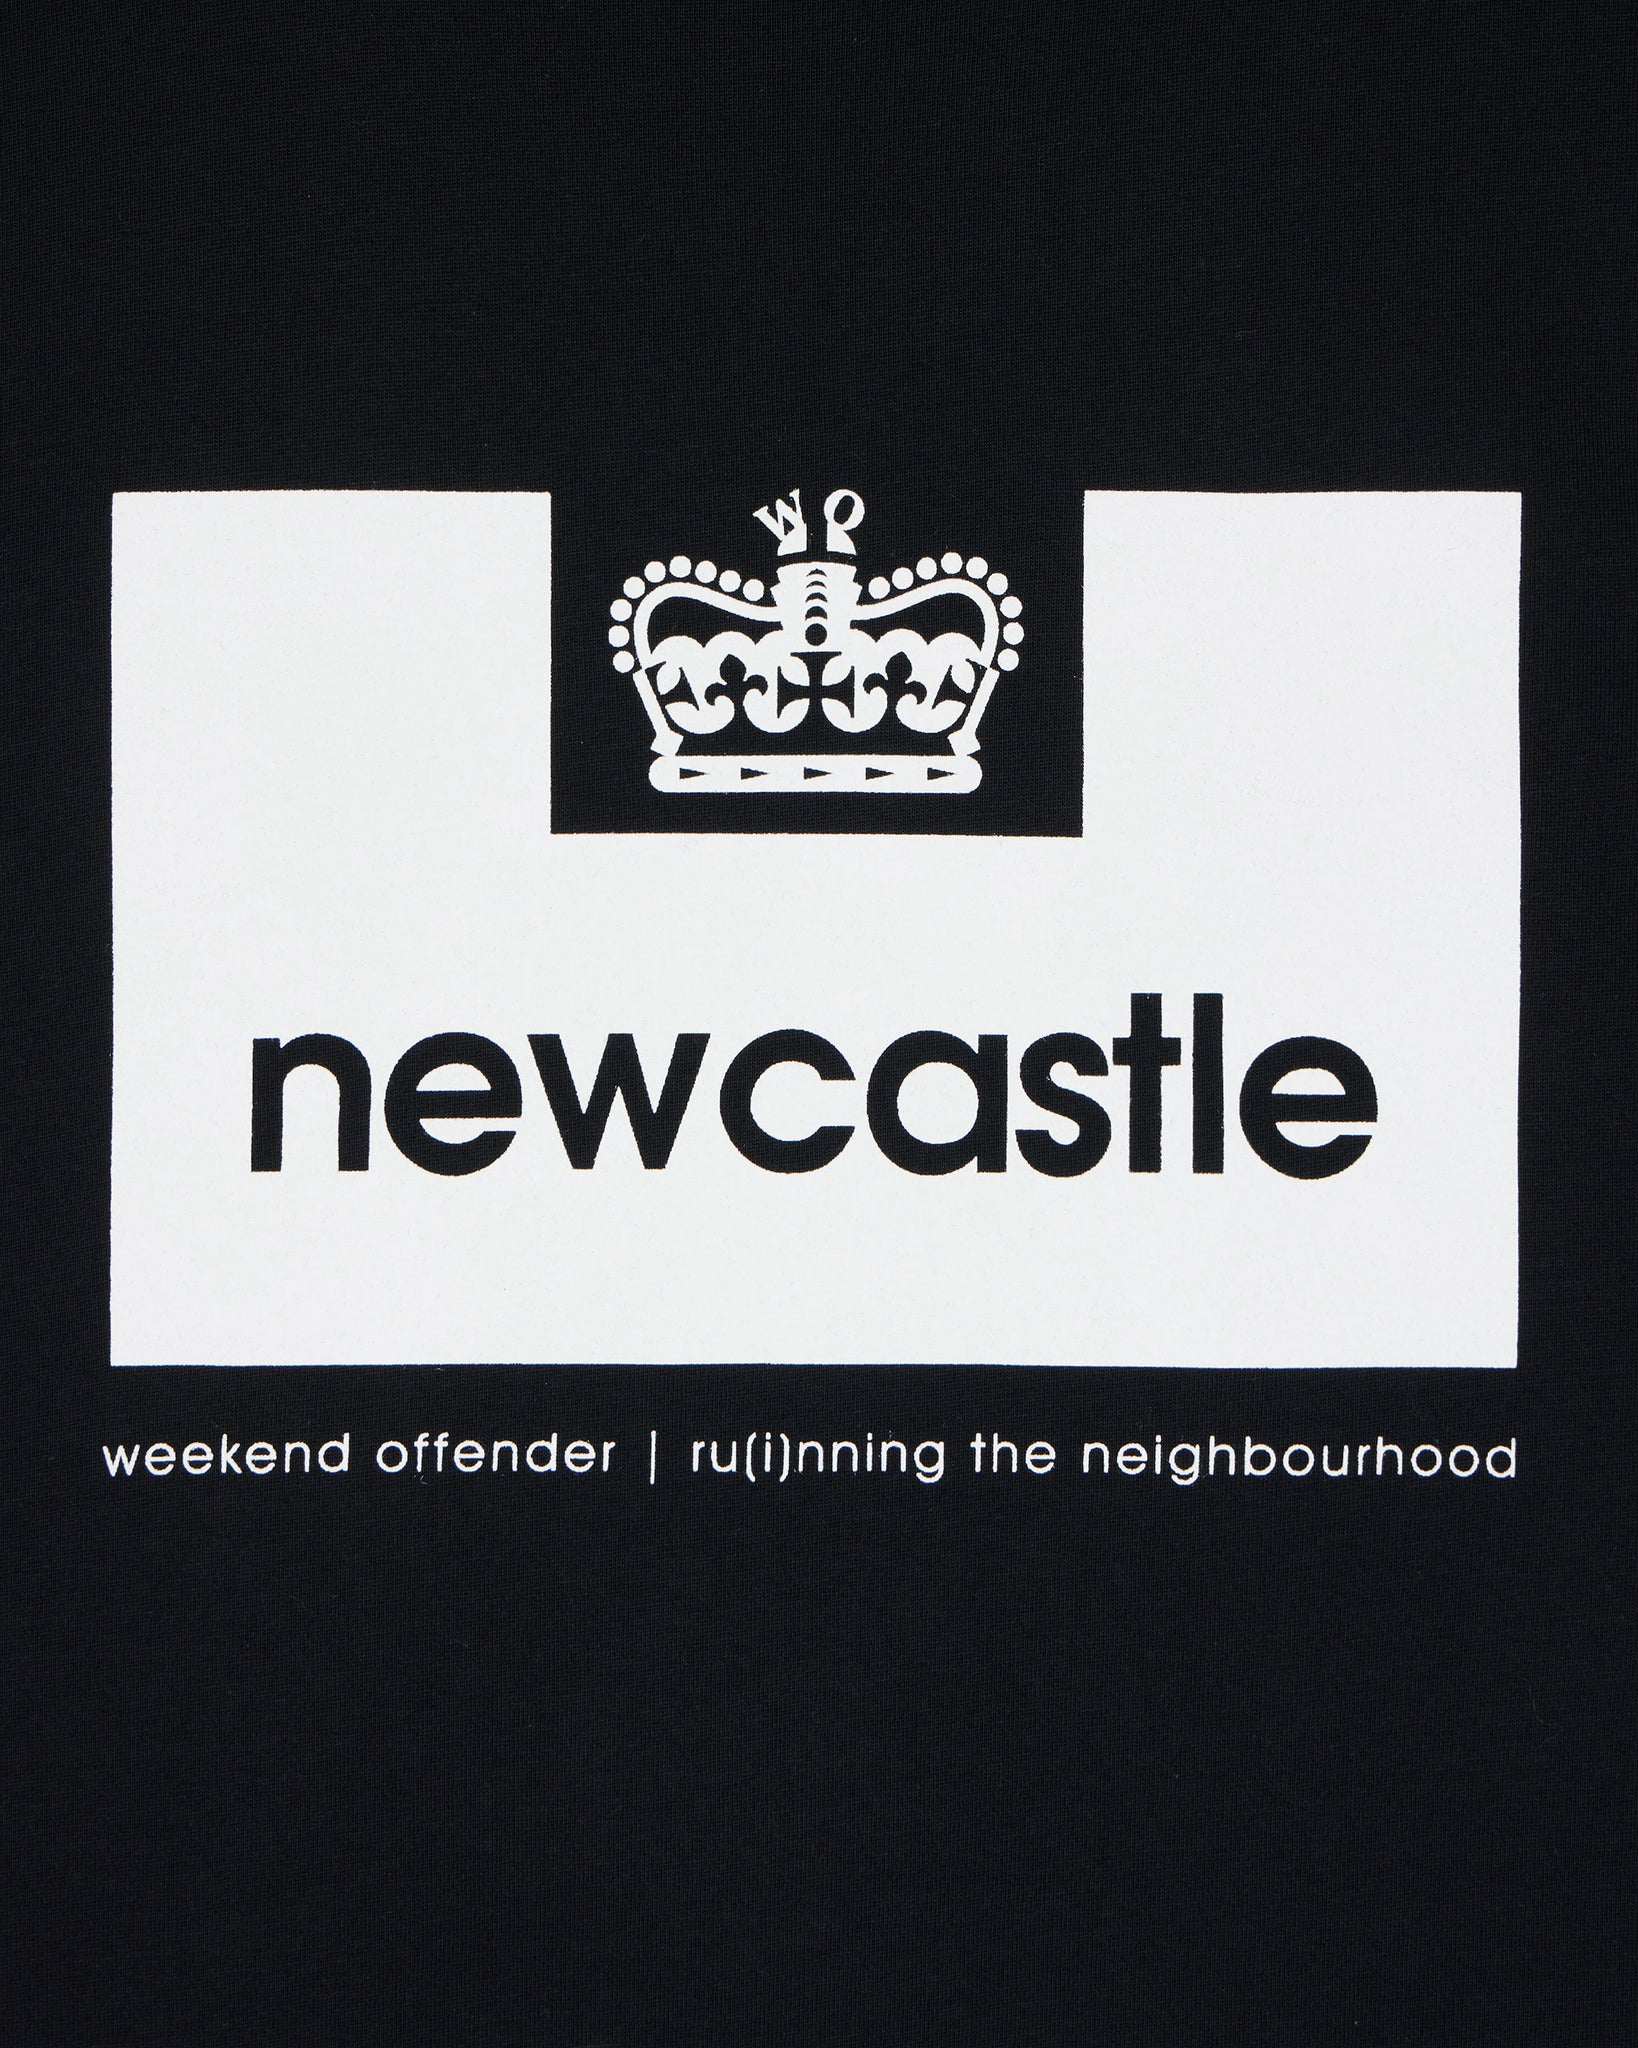 City Series 2 Newcastle T-Shirt Black